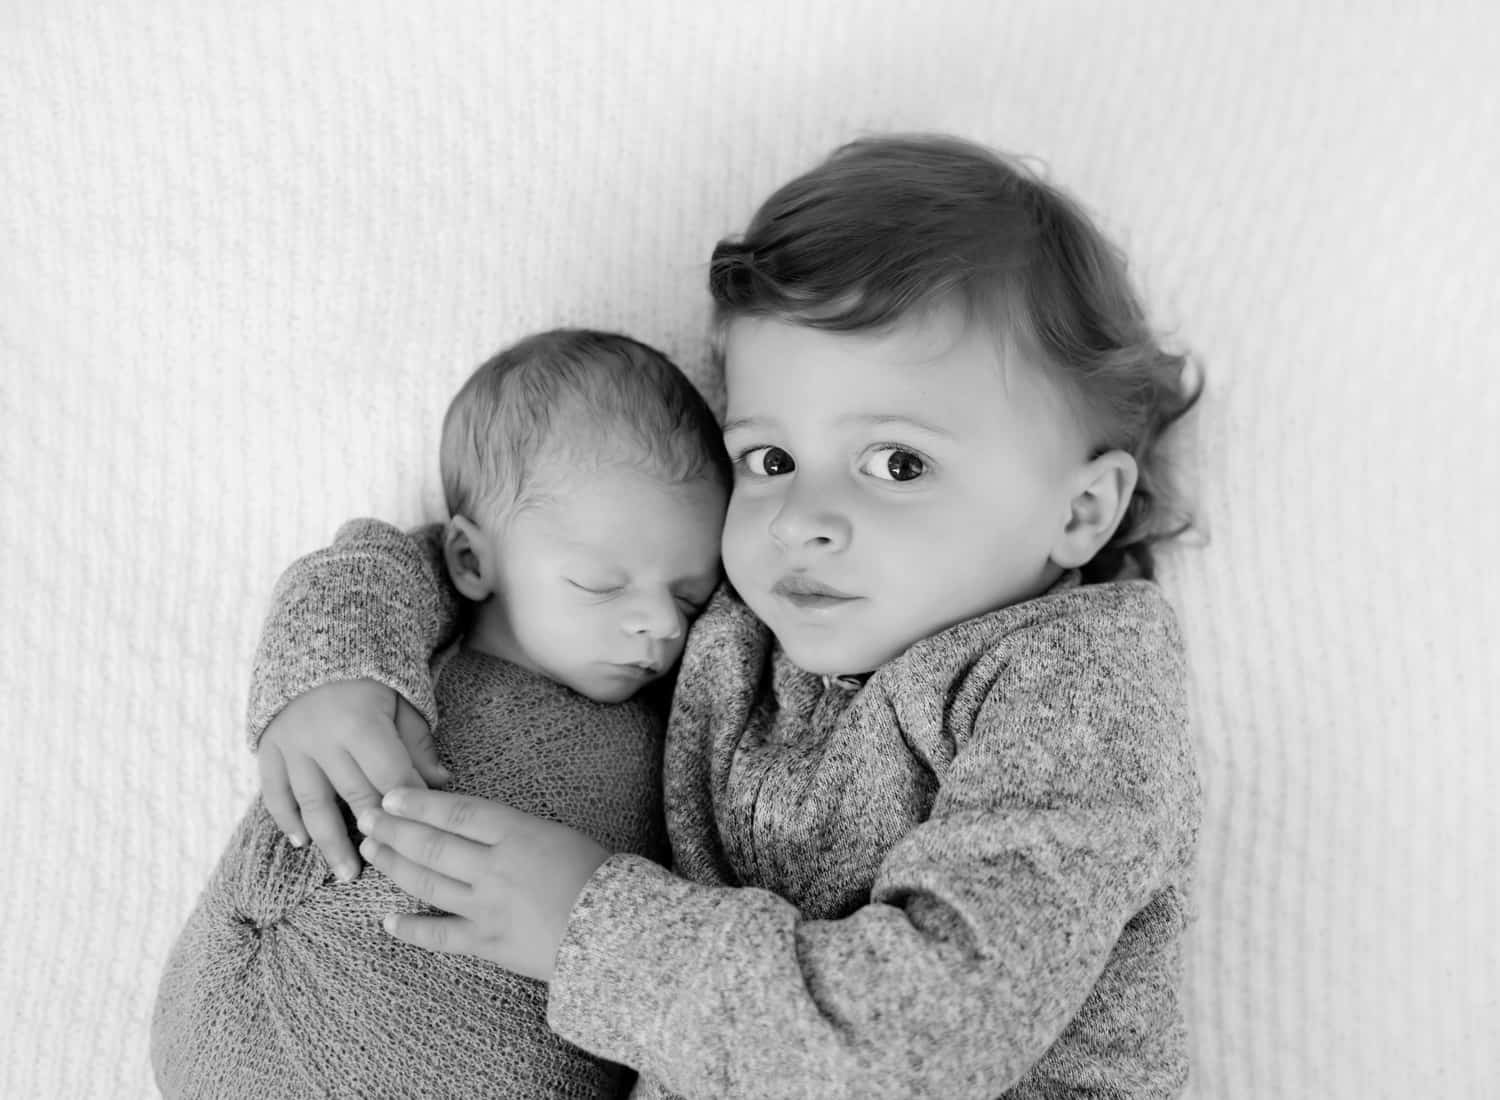 Infant-with-older-brother.jpg